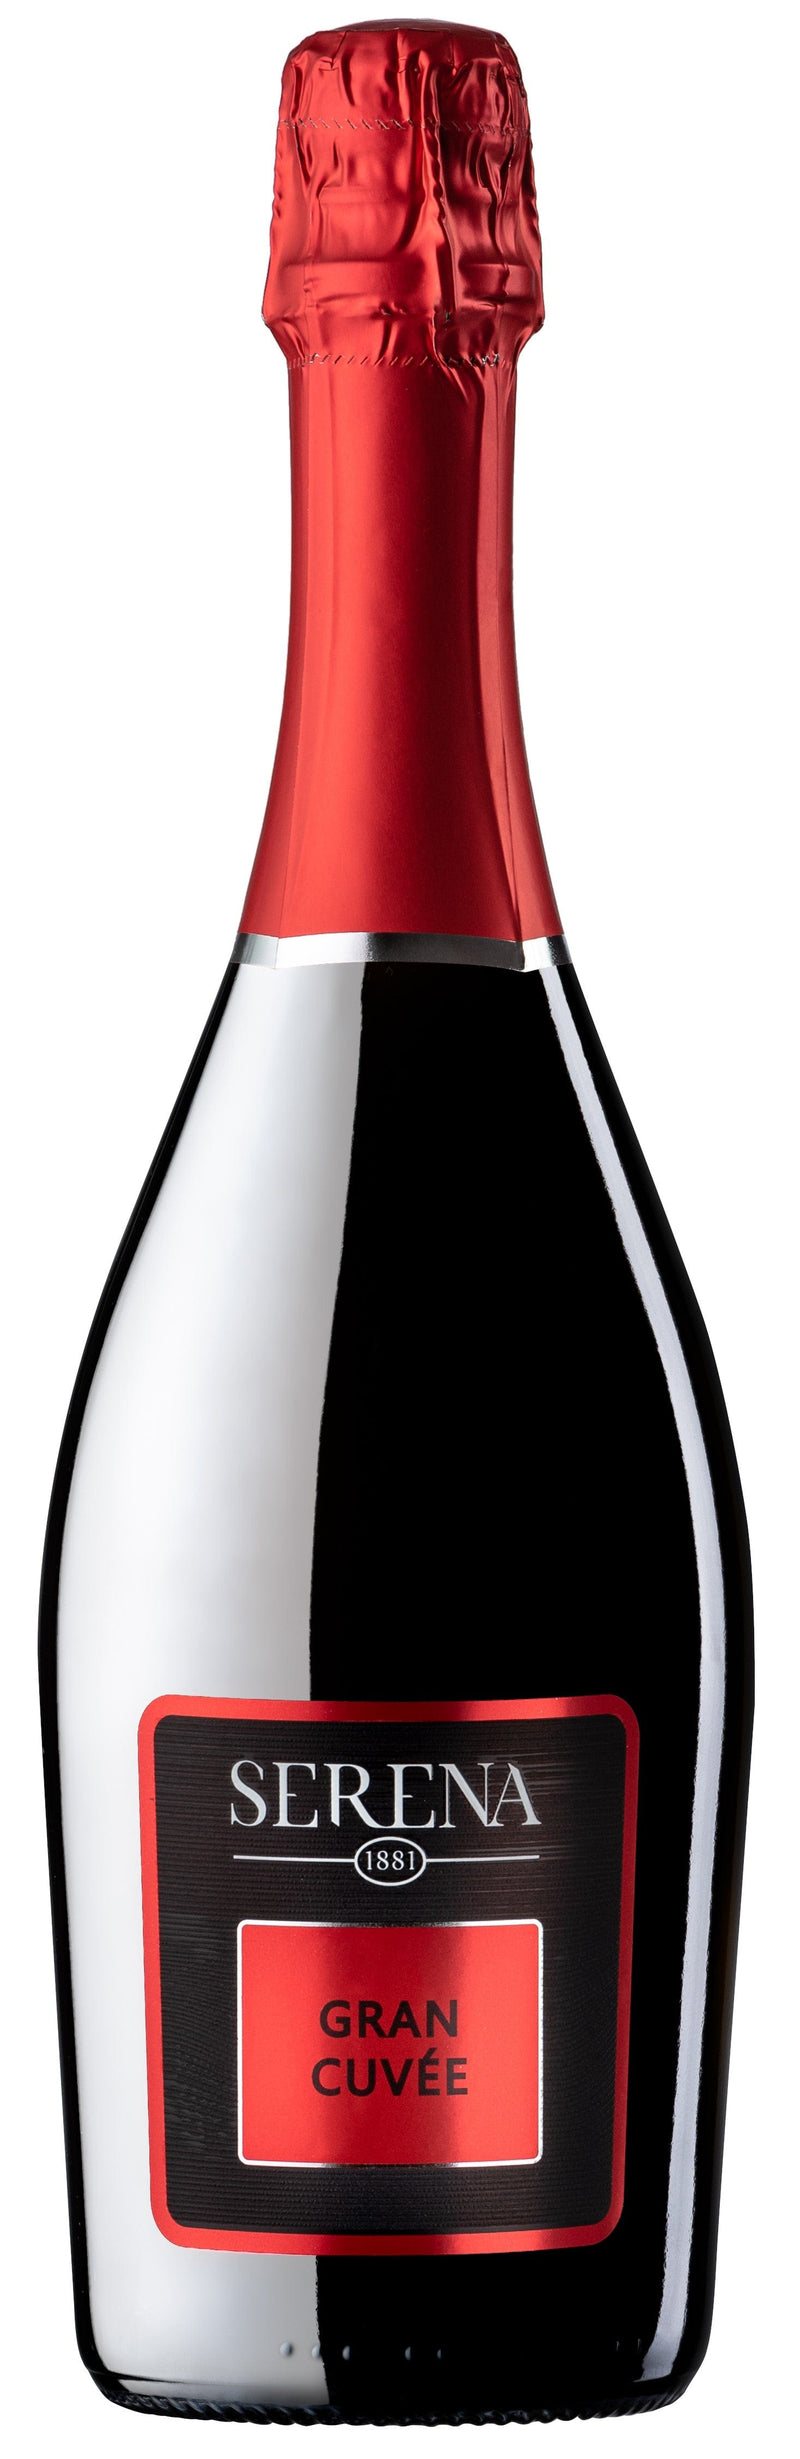 Serena Wines 1881 Gran Cuvée Spumante Prosecco 75cl